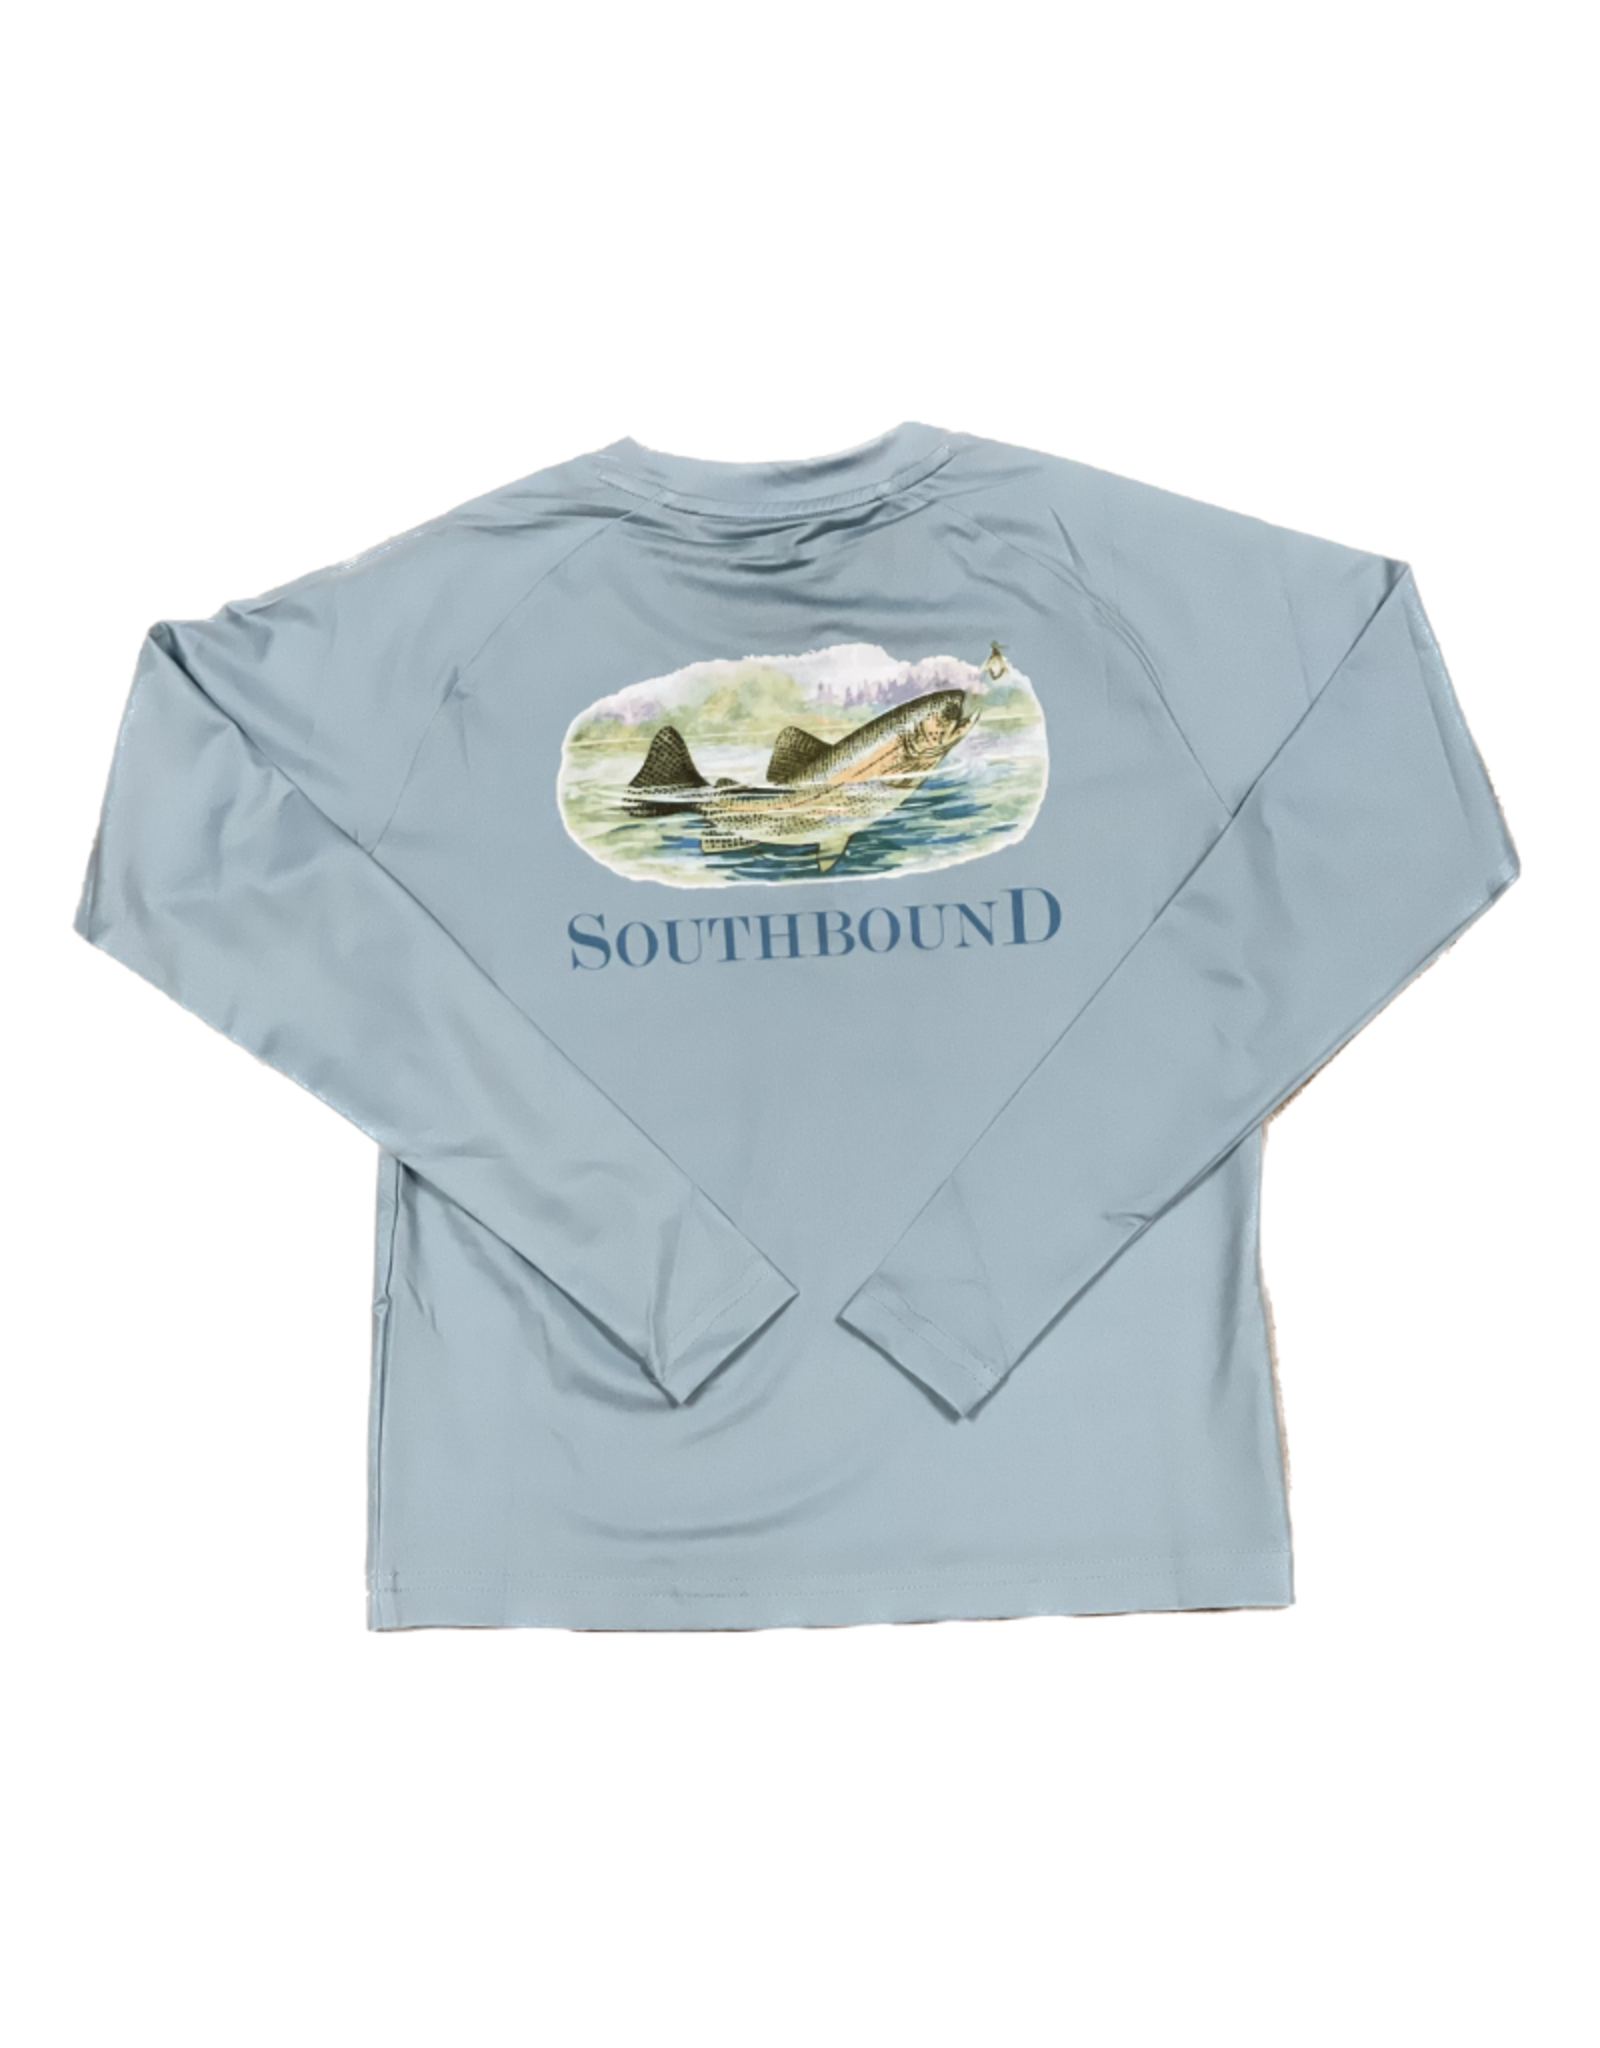 https://cdn.shoplightspeed.com/shops/629241/files/49619945/1600x2048x1/southbound-ls-dry-fit-teal-fish-shirt.jpg